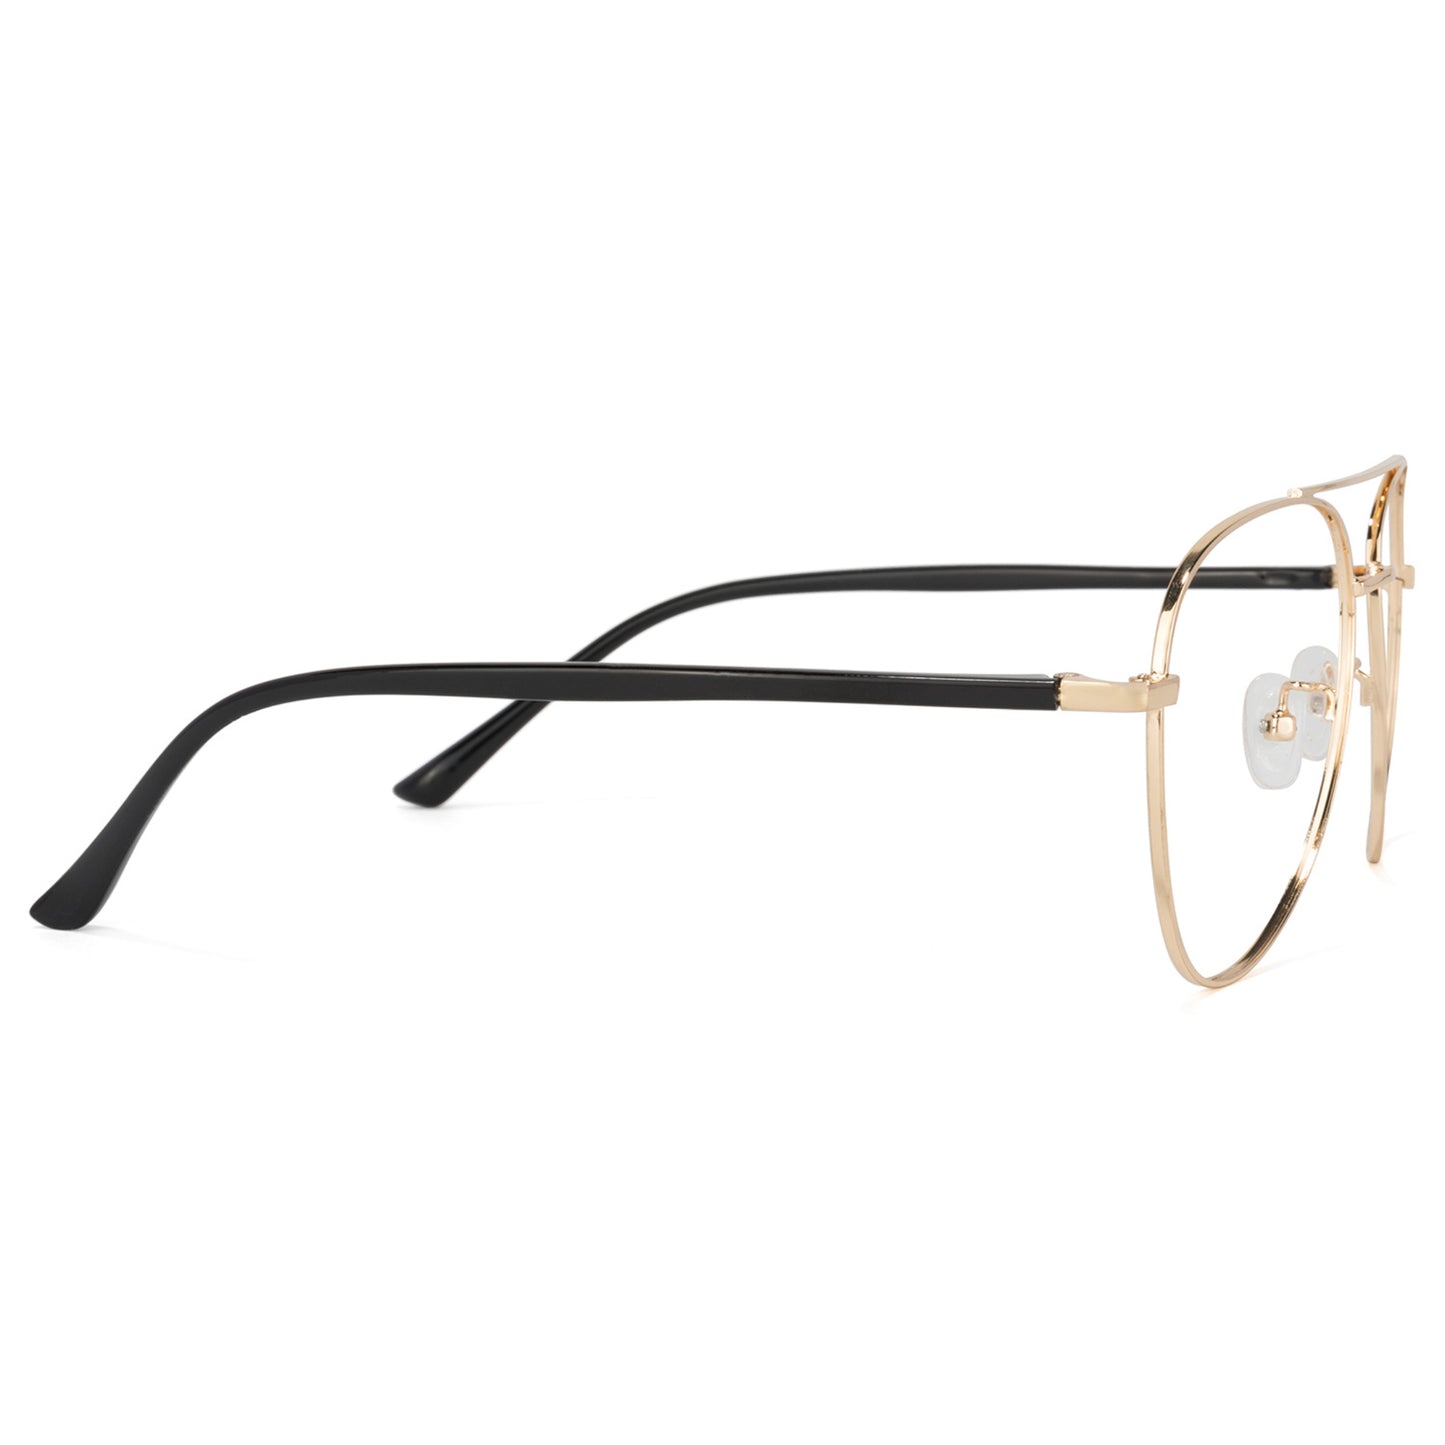 Jack - Blue Light Glasses- Optin Store